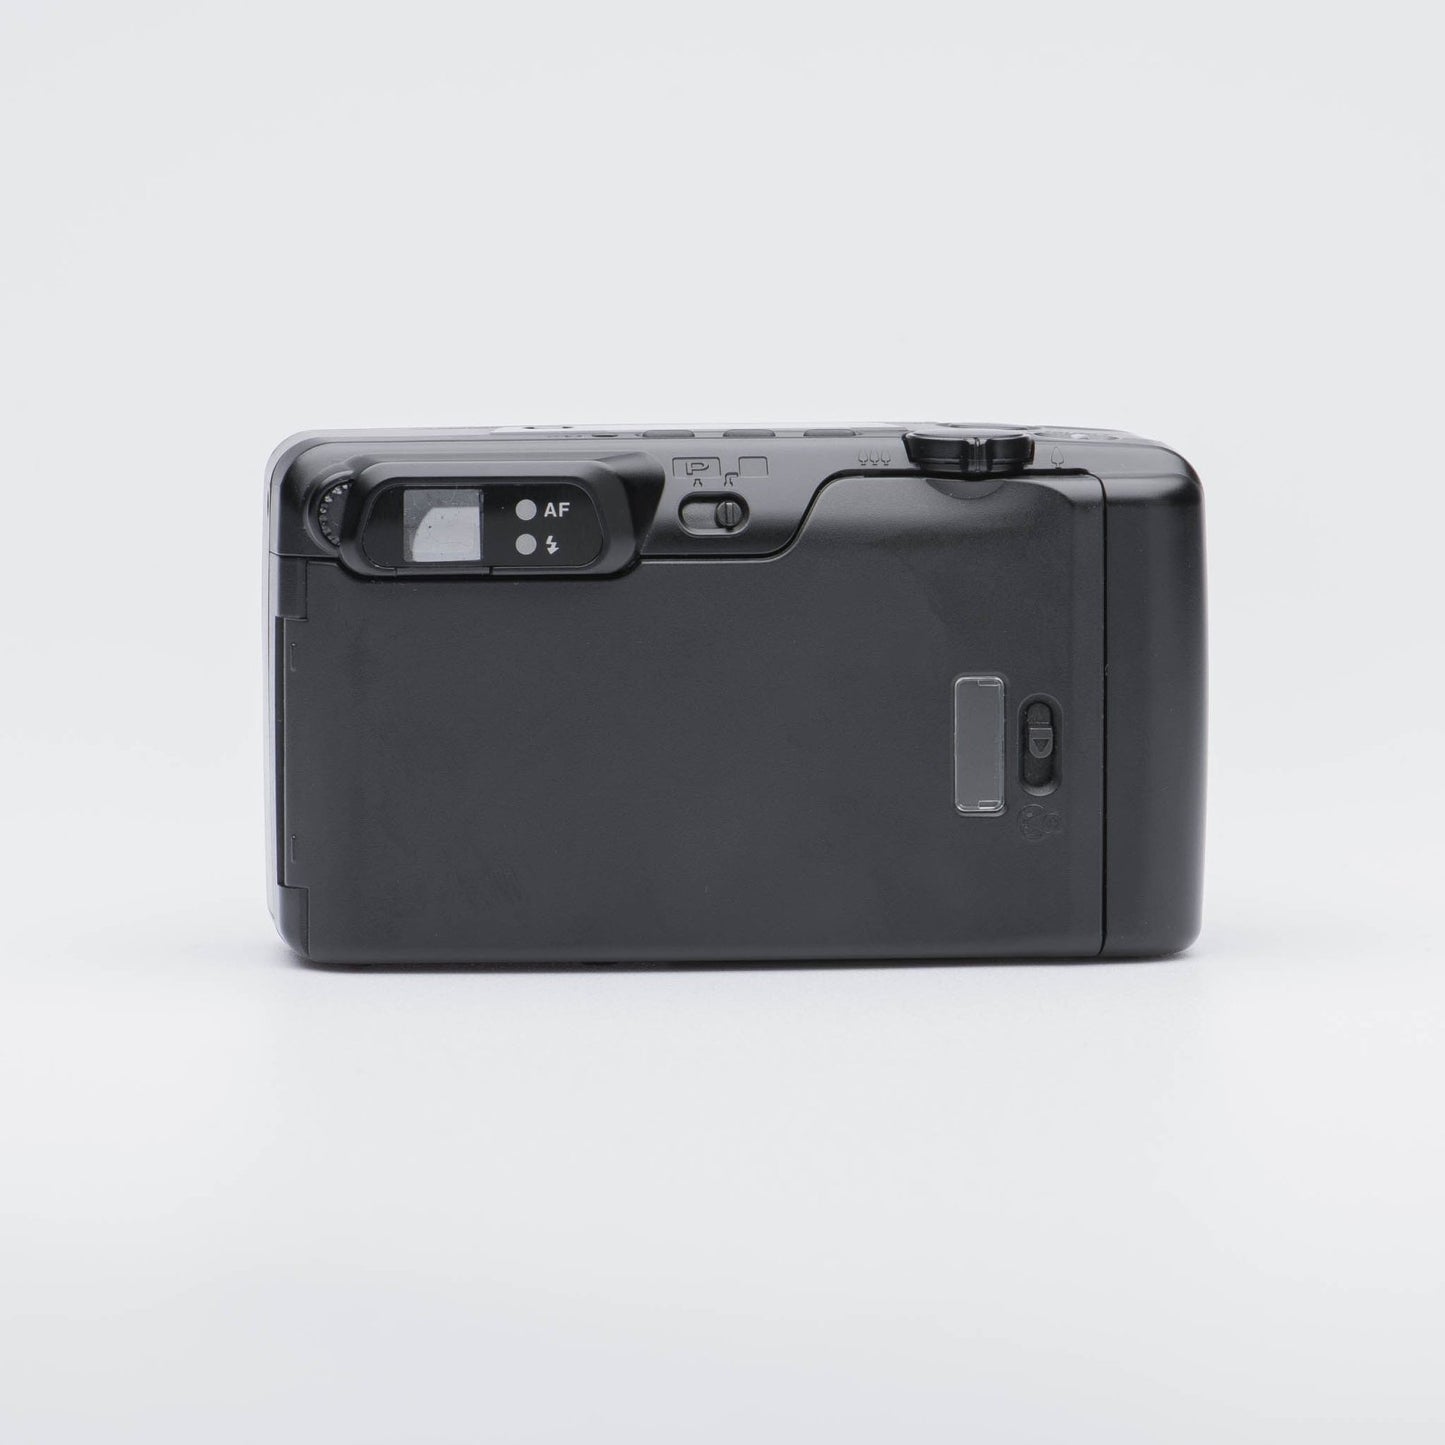 Pentax Espio 115M 35mm Film Camera - Camera Kangaroo